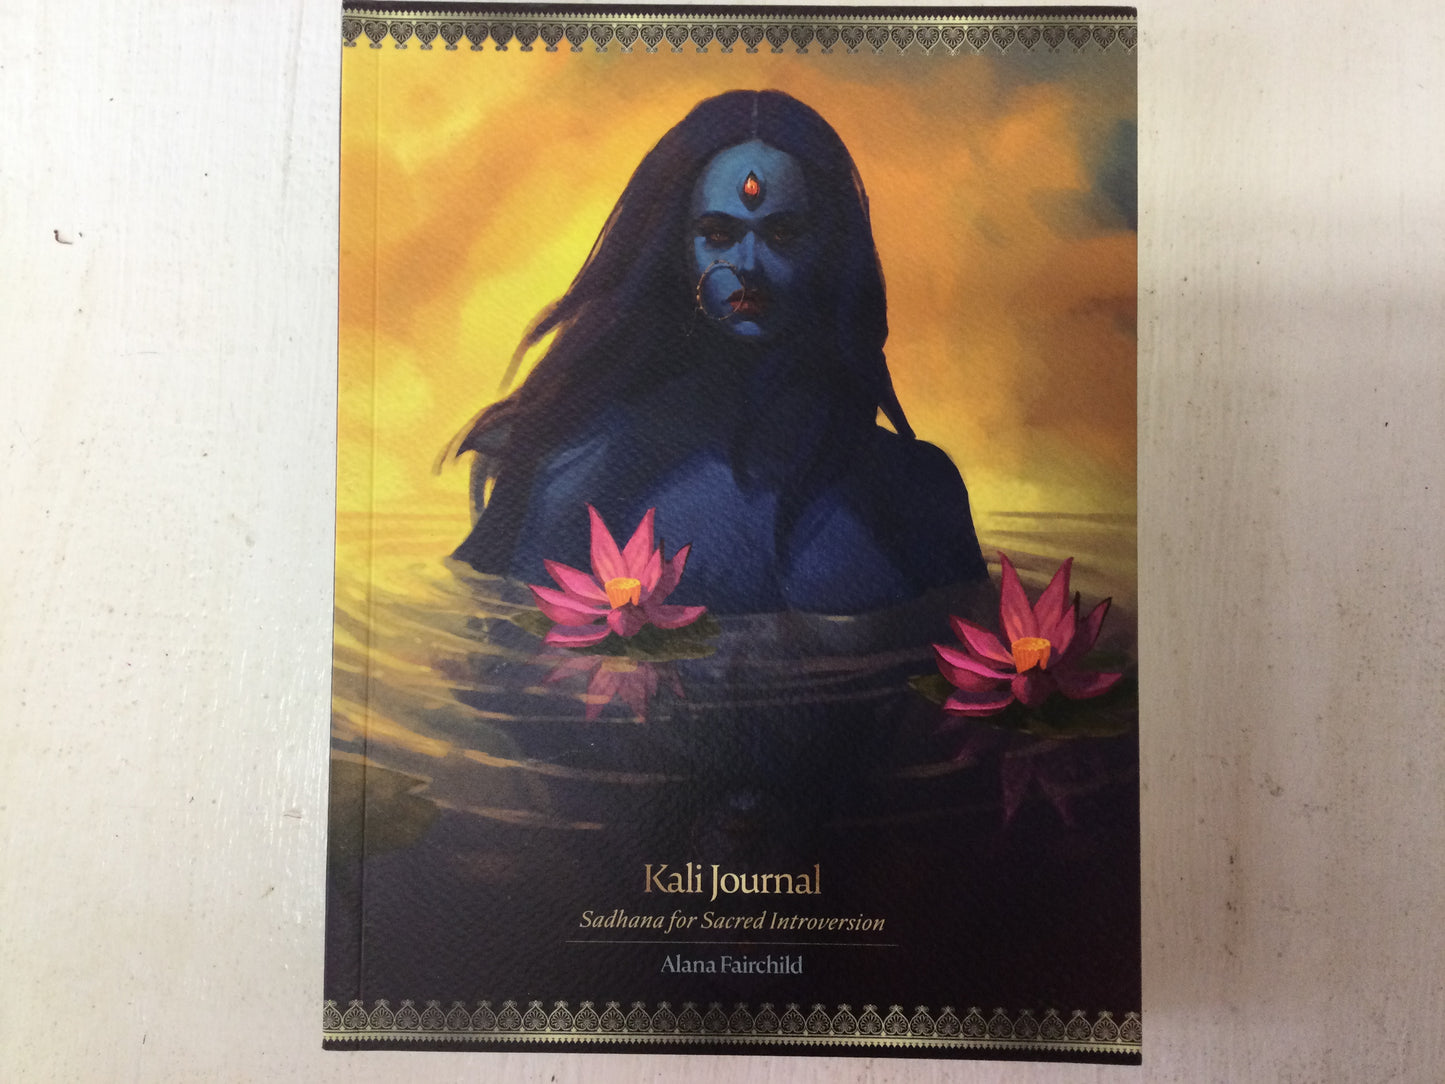 Kali Journal, Sadhana for Sacred Introversion